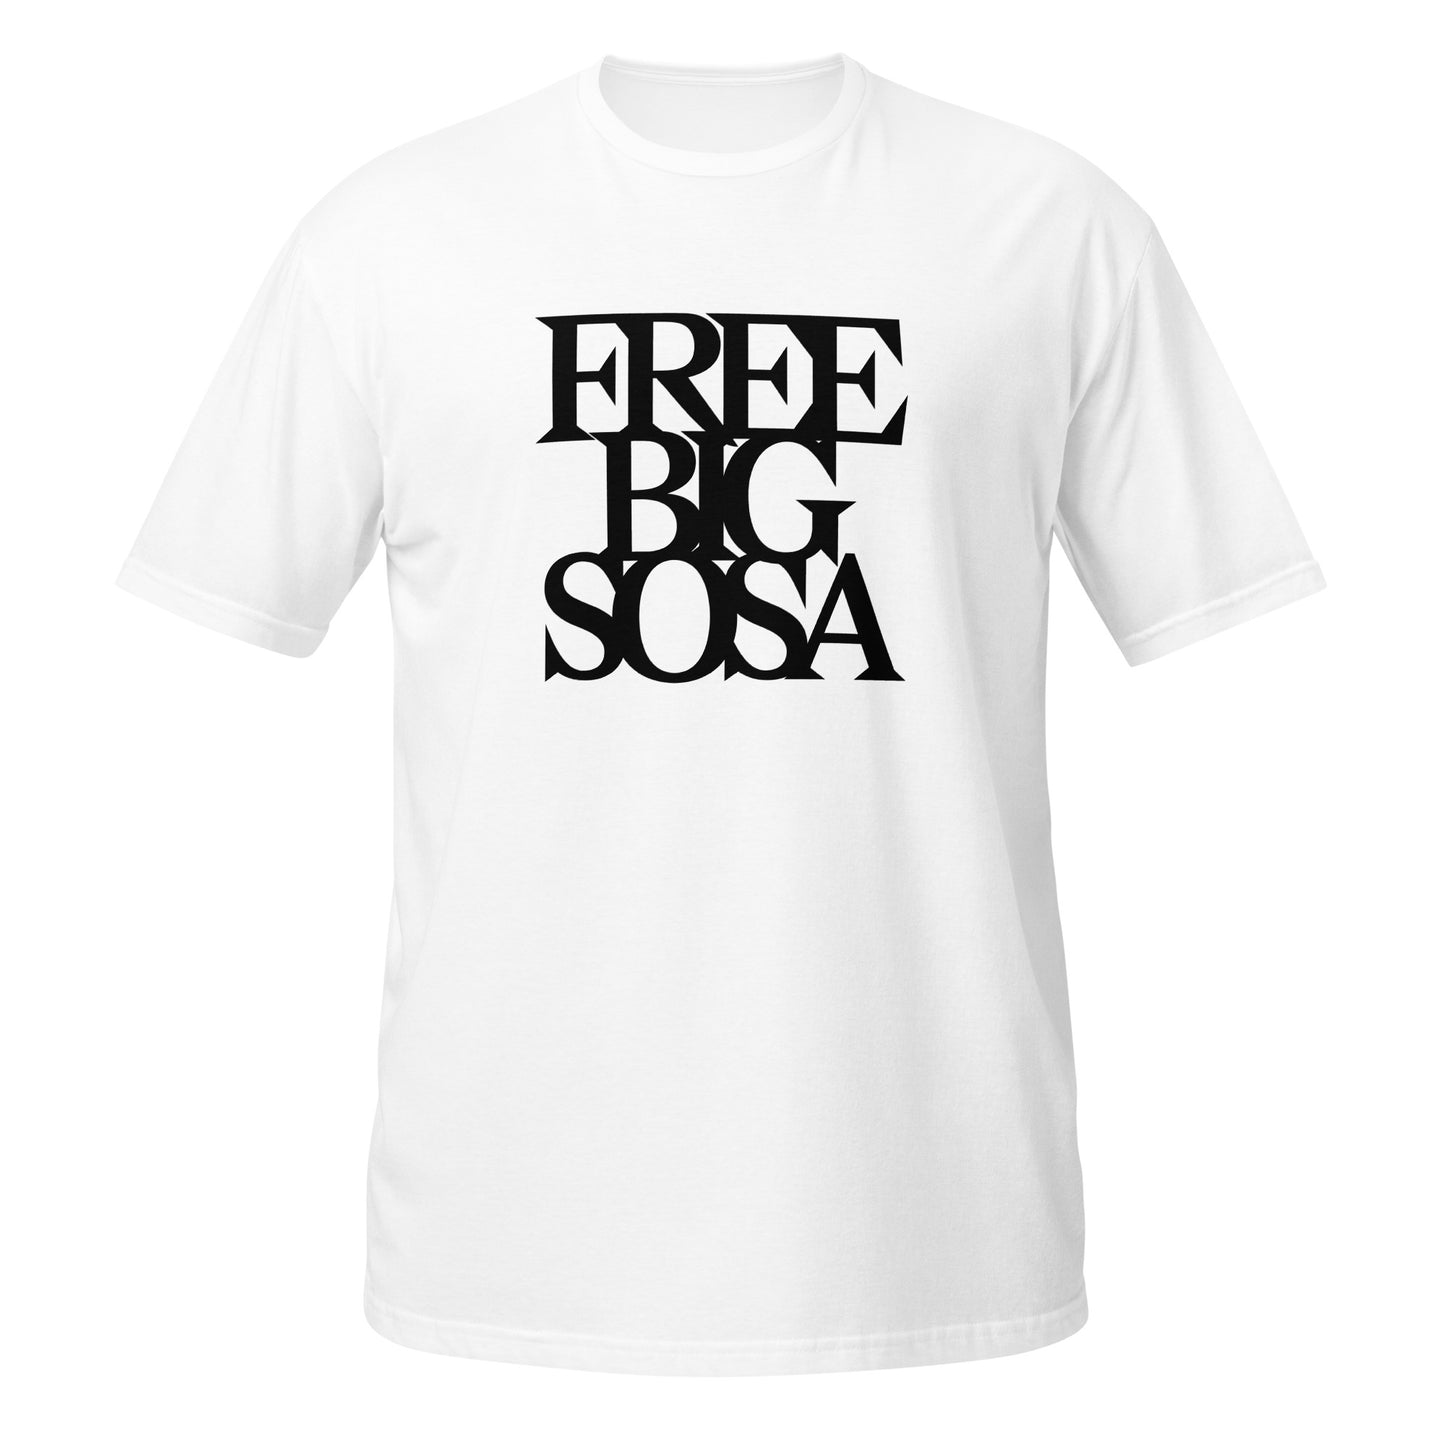 FREE BIG SOSA SHIRT